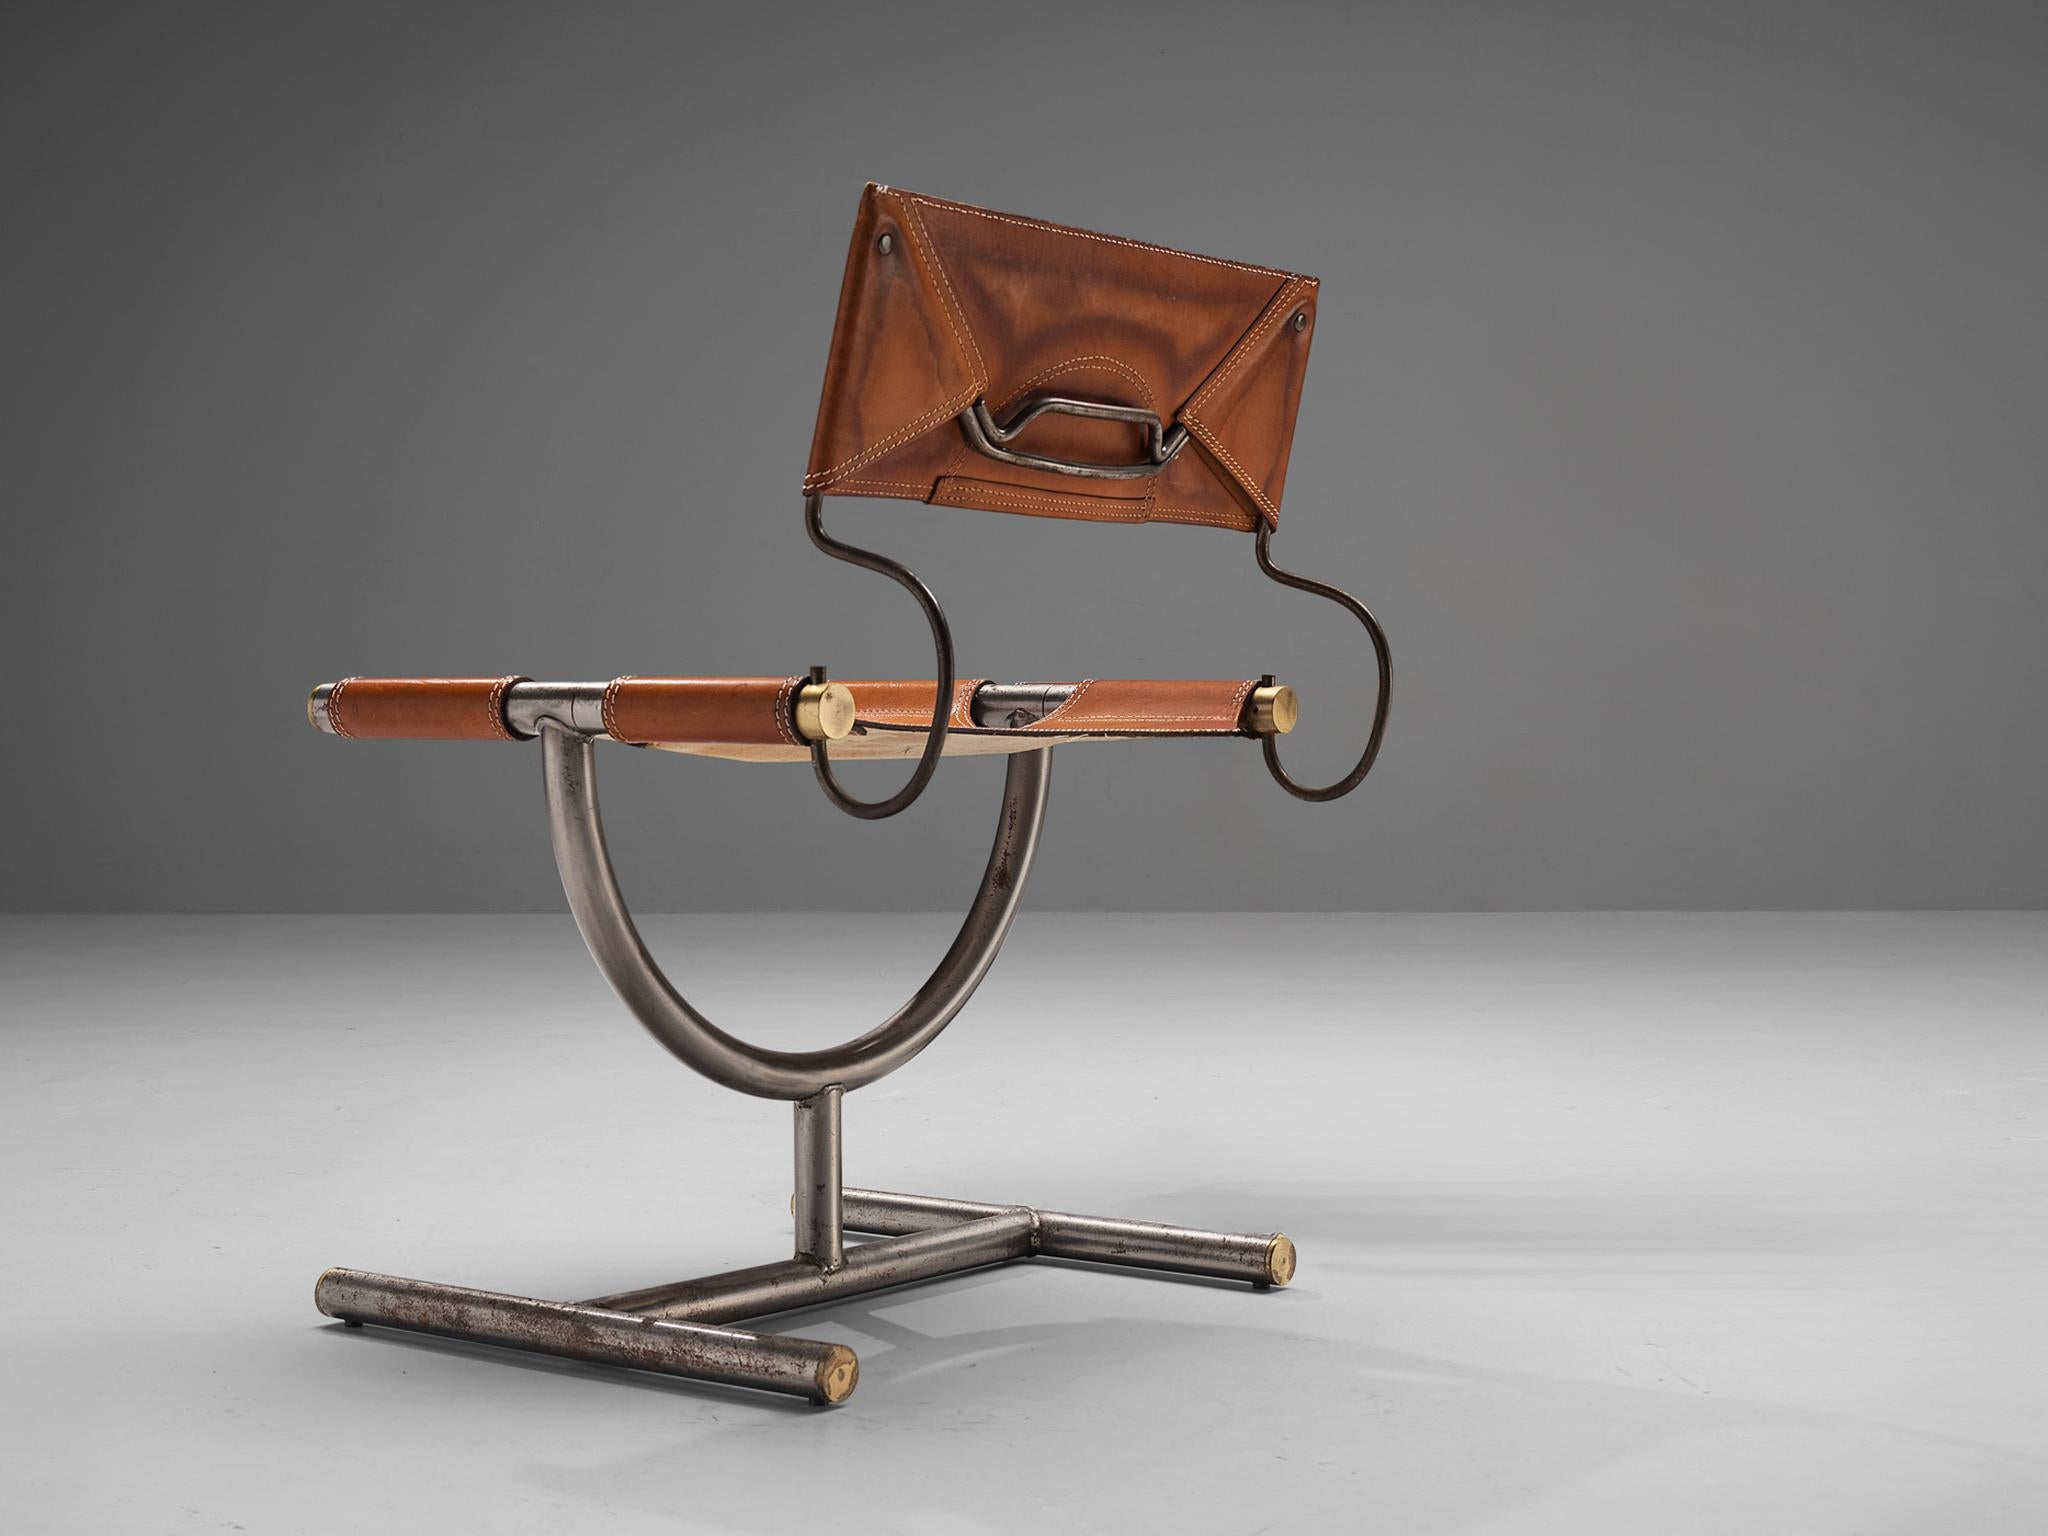 Afra & Tobia Scarpa 'Benetton' Stuhl aus Leder und Stahl  (Ende des 20. Jahrhunderts) im Angebot